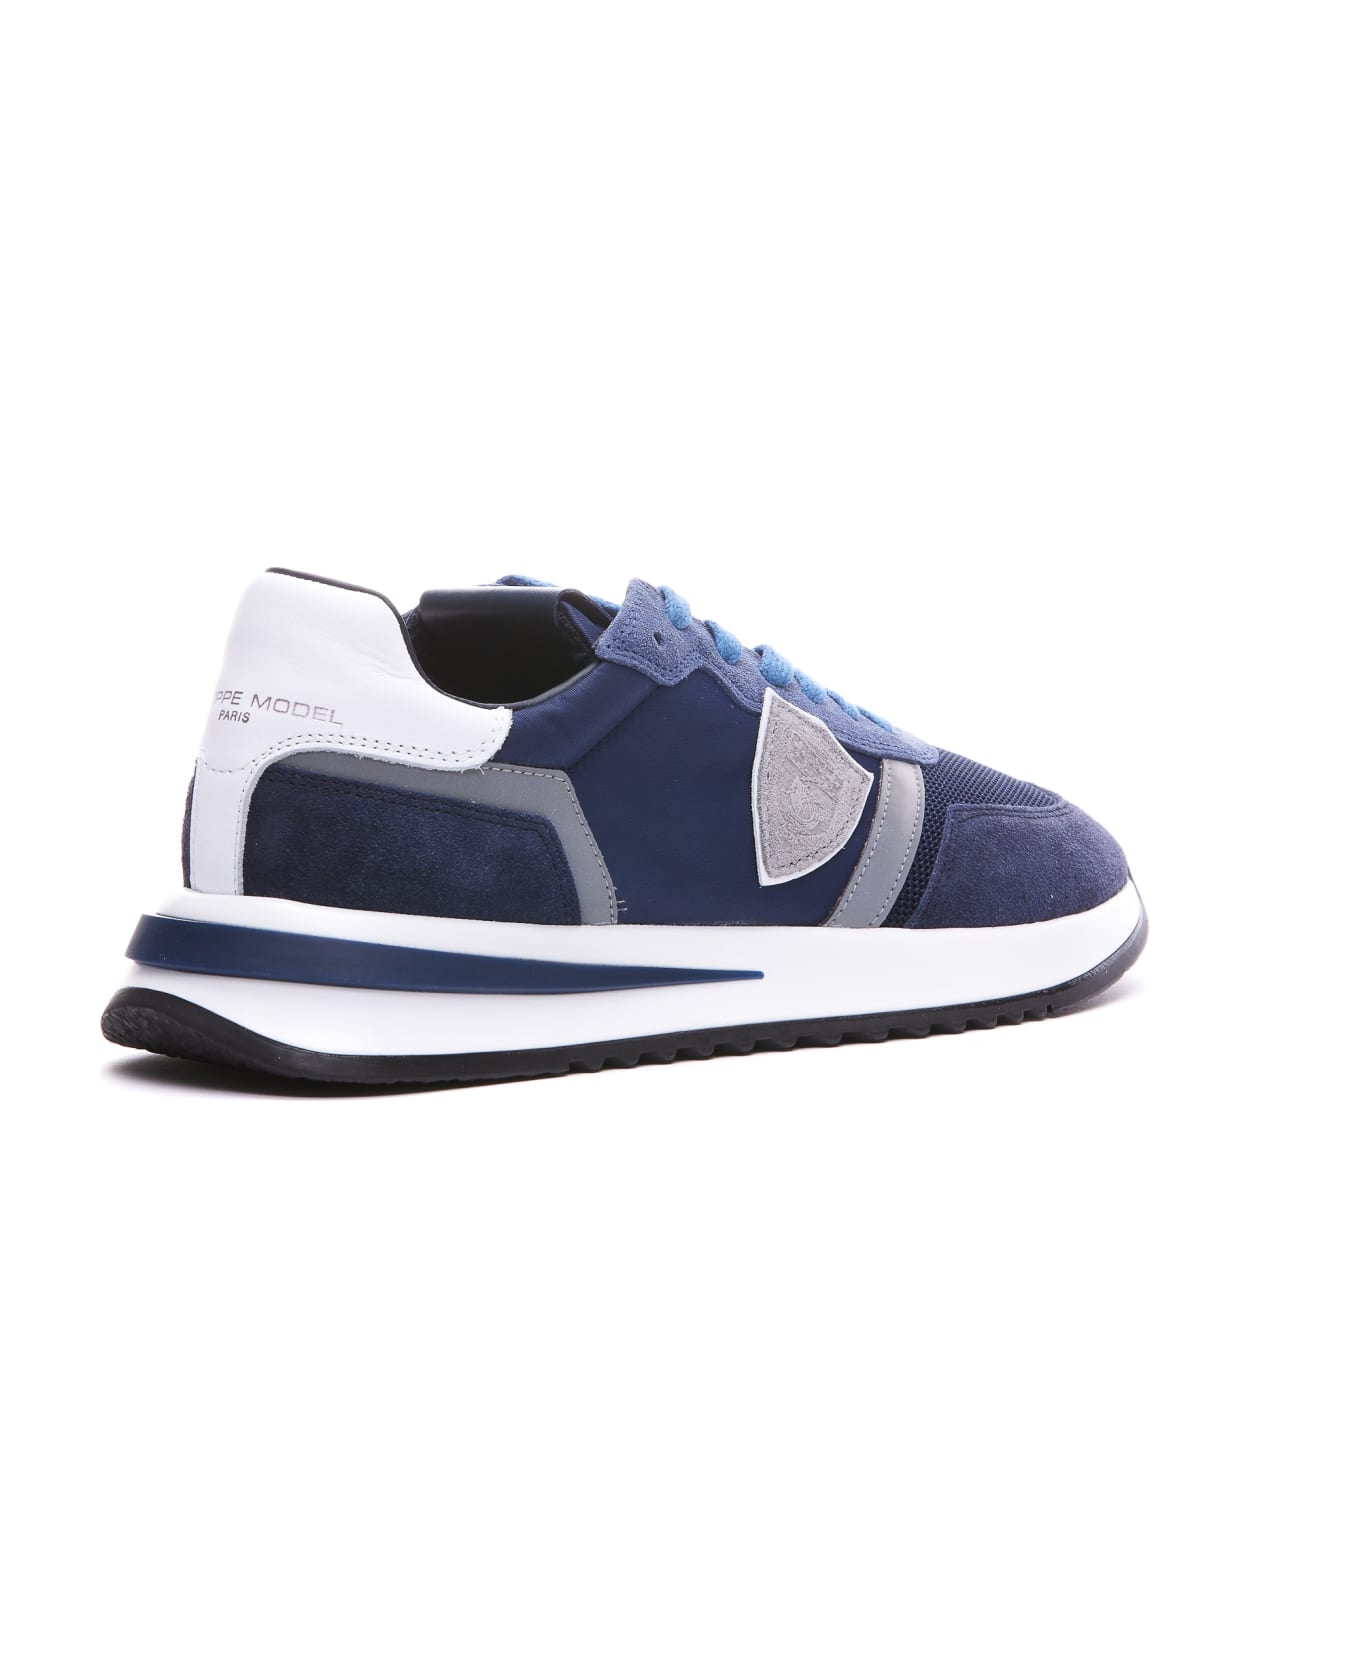 Philippe Model Tropez 2.1 Sneakers - BLUE